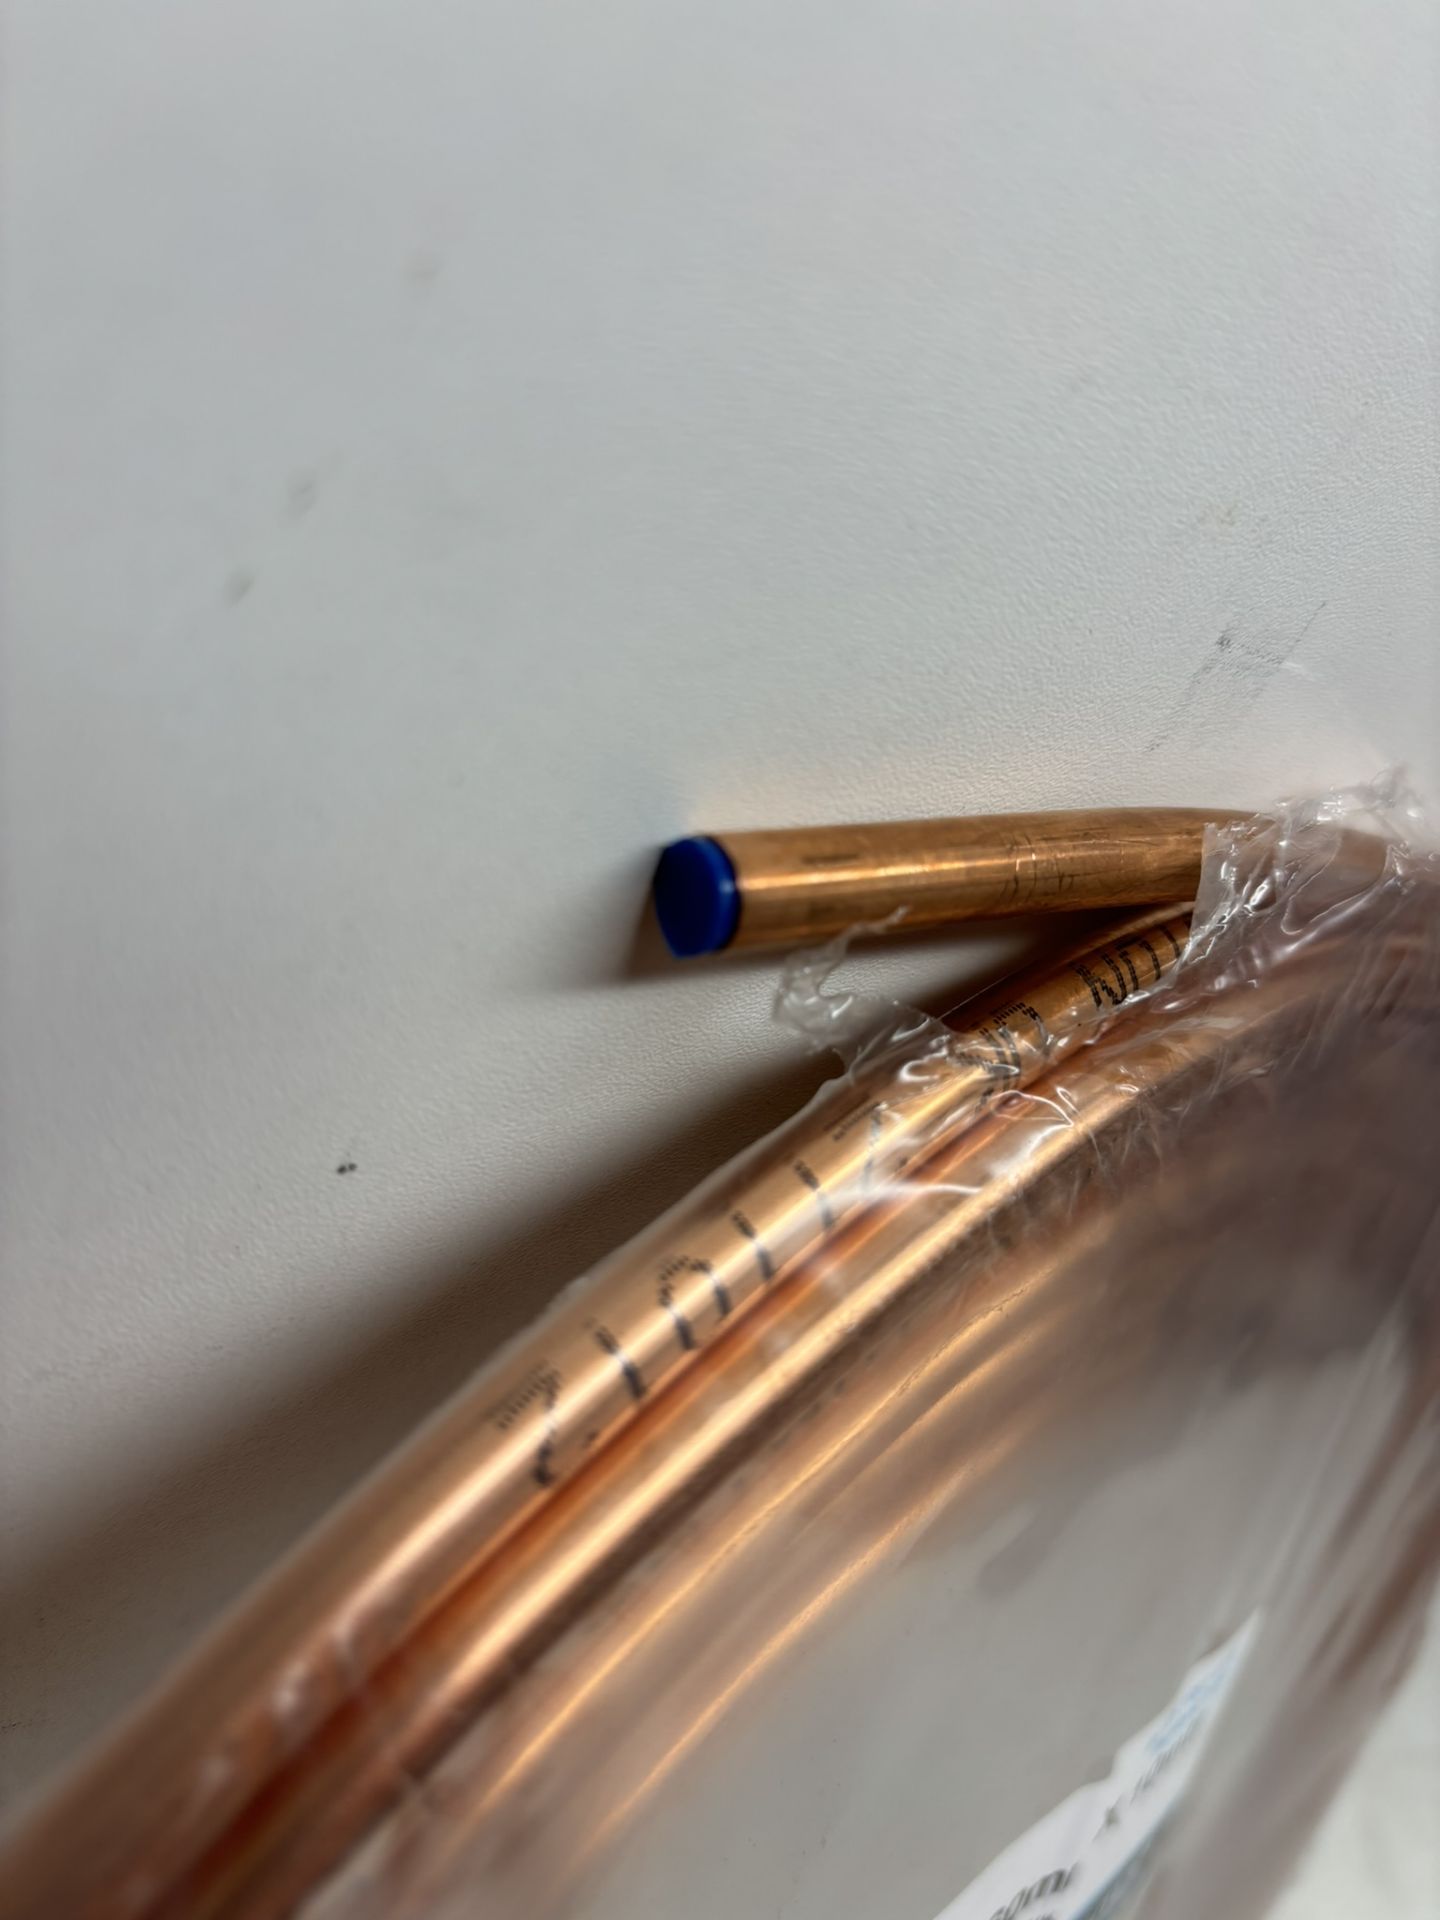 5 x Lawton 8.00mm x 0.60mm x 10Mtr Copper Plumbing Tube Coils - Image 5 of 9